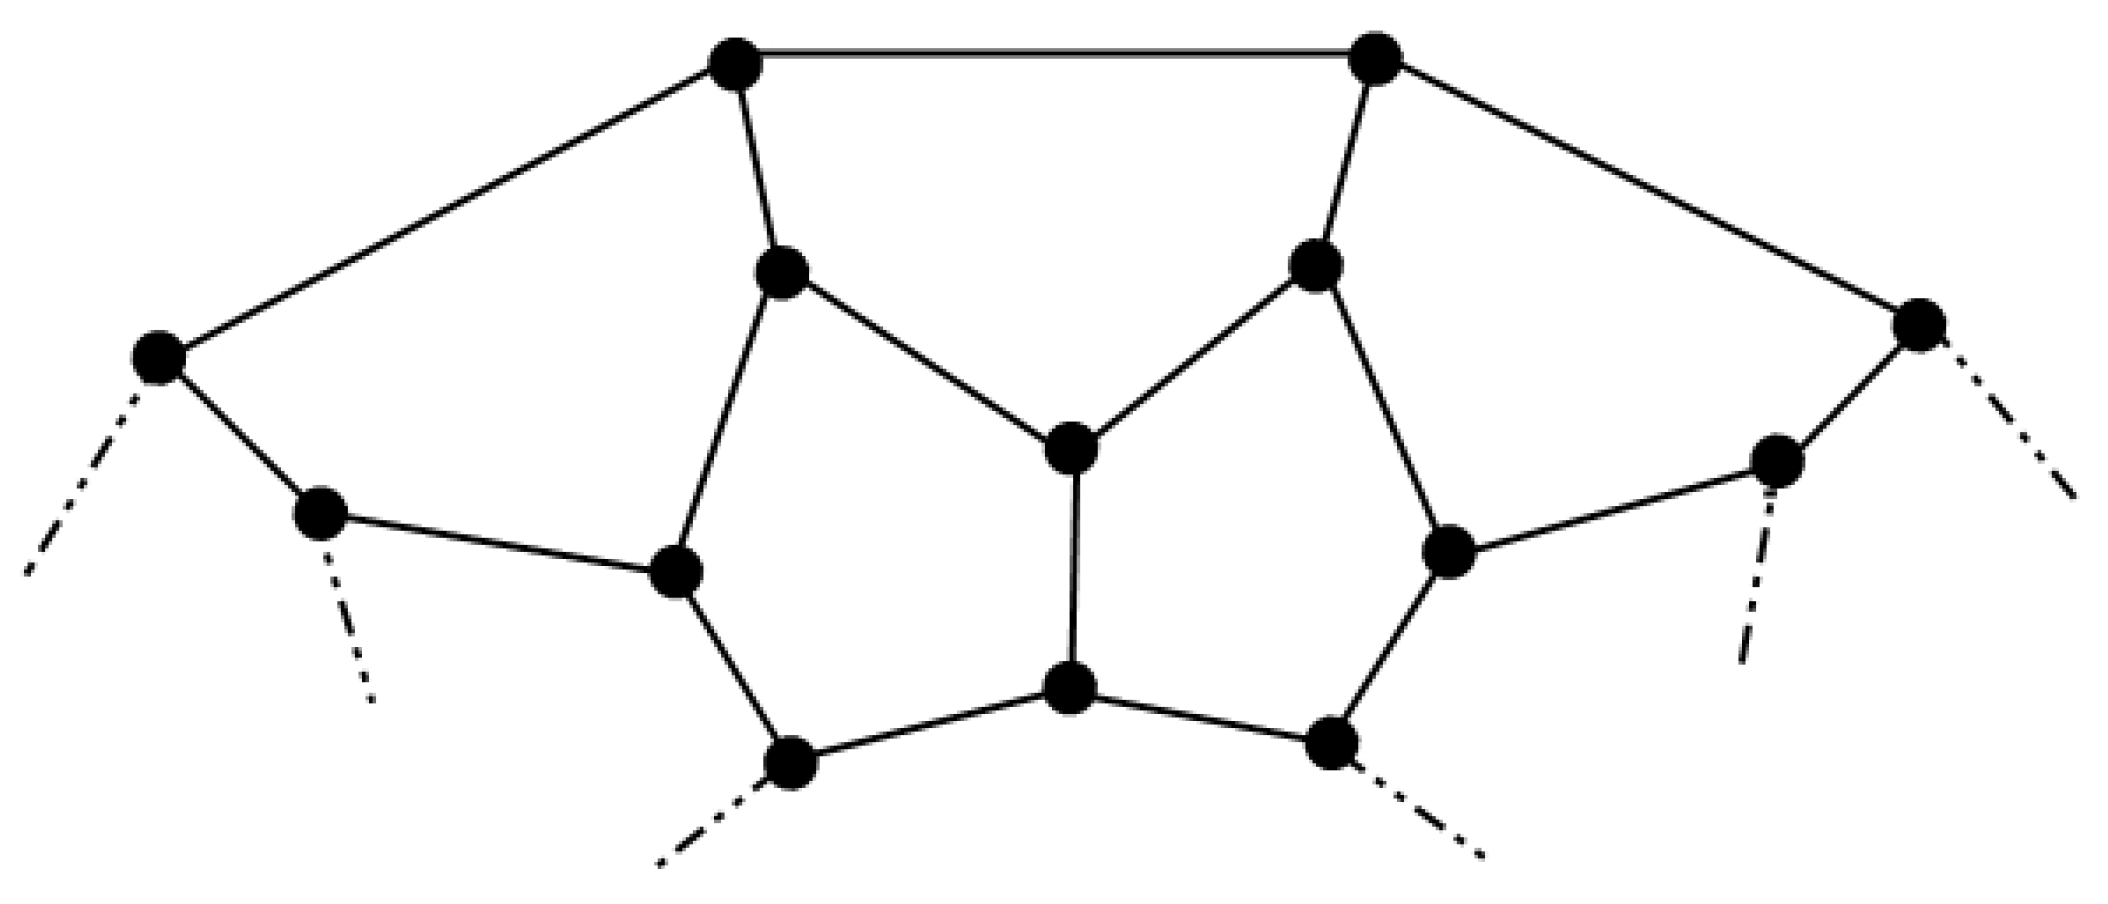 Convex graph